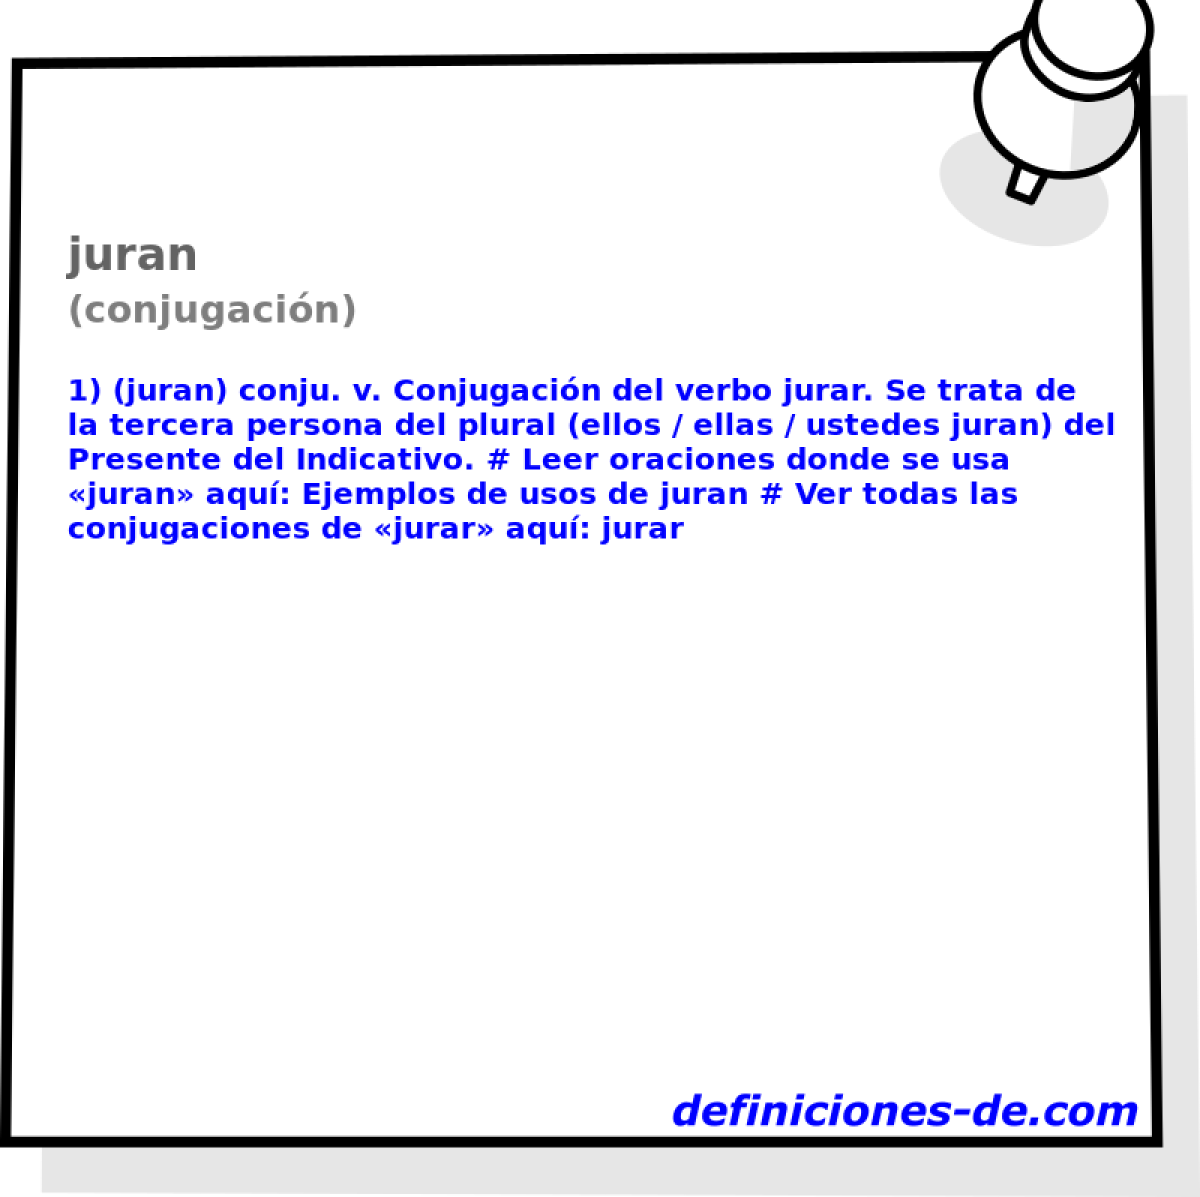 juran (conjugacin)